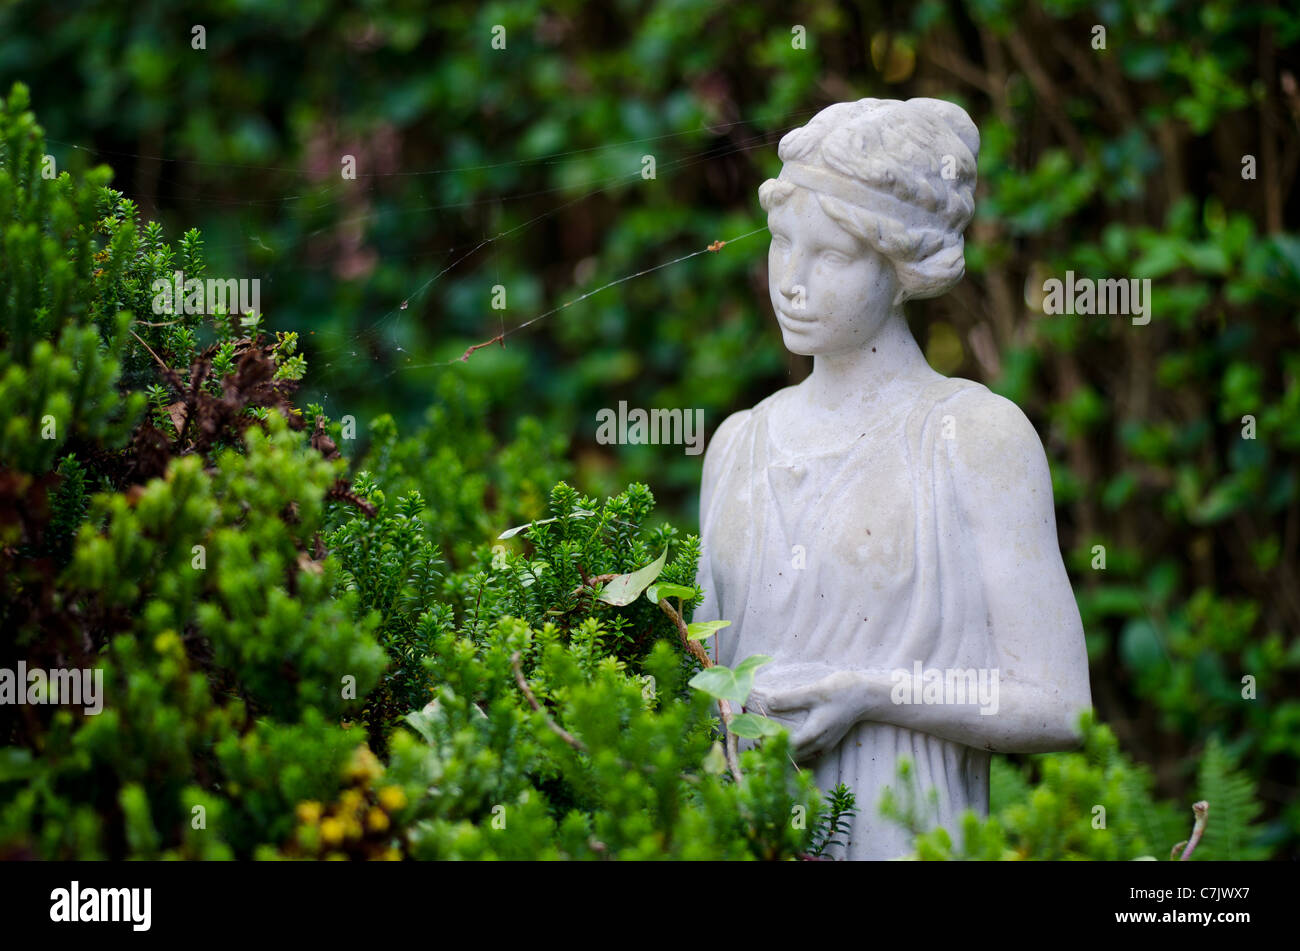 Garden figurine sitting amongst hebe plant Stock Photo